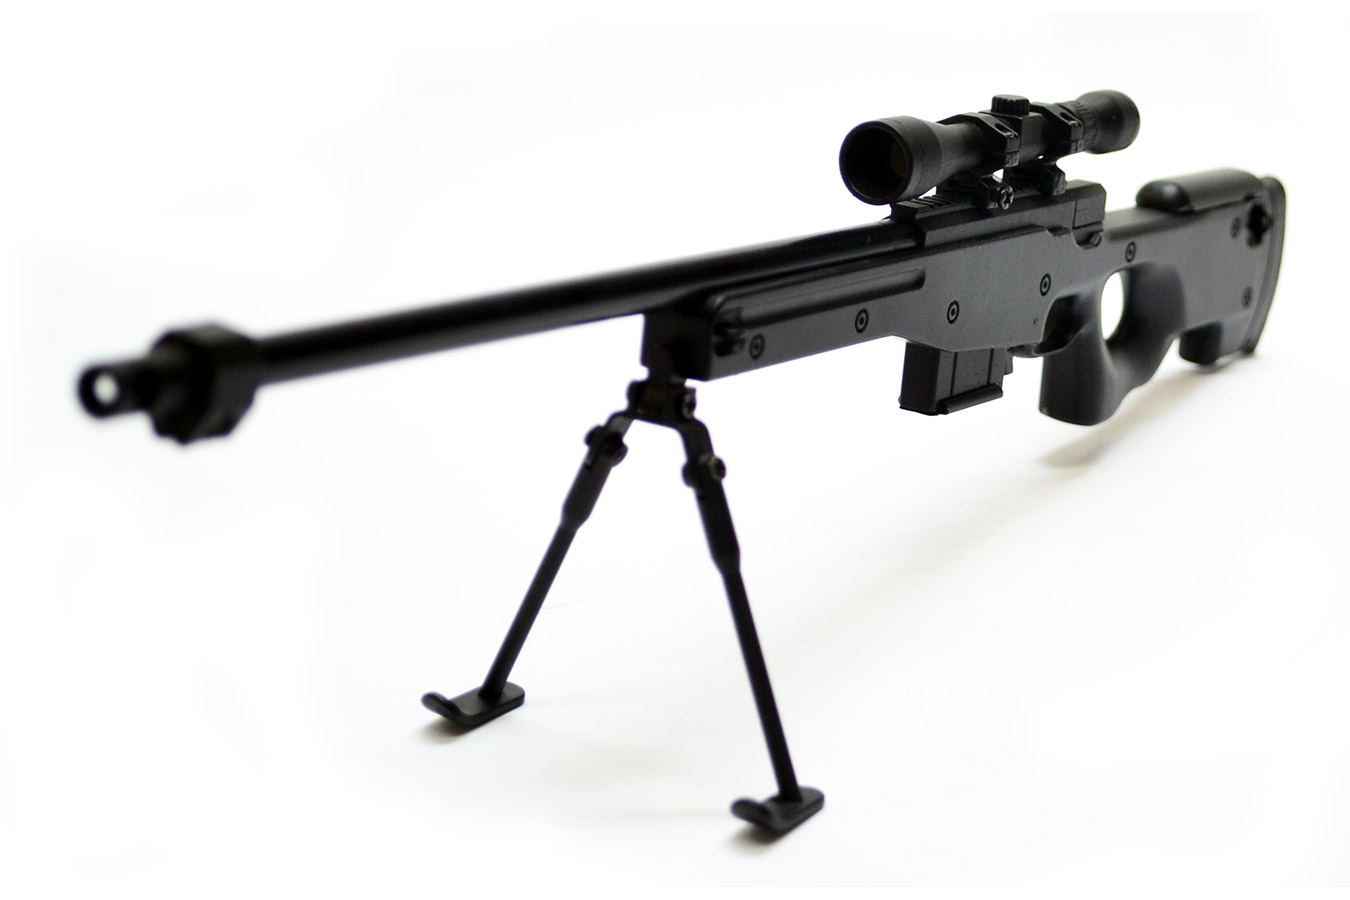 Model sniper rifle Accuracy International L96A1 (AWP) scale 1:4 black